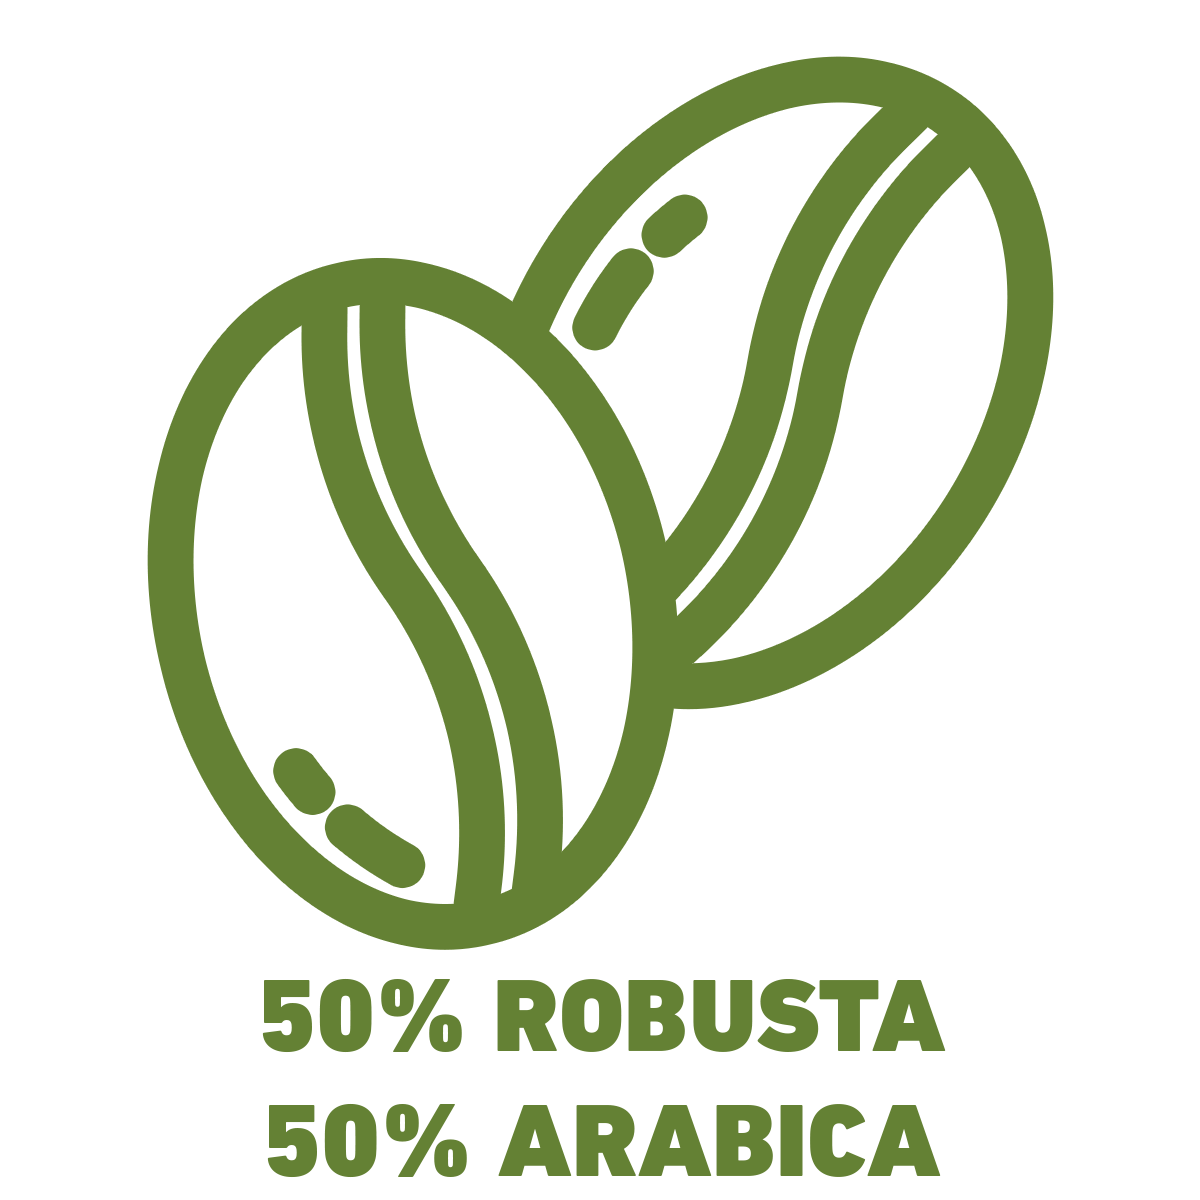 50% Robusta 50% arabica